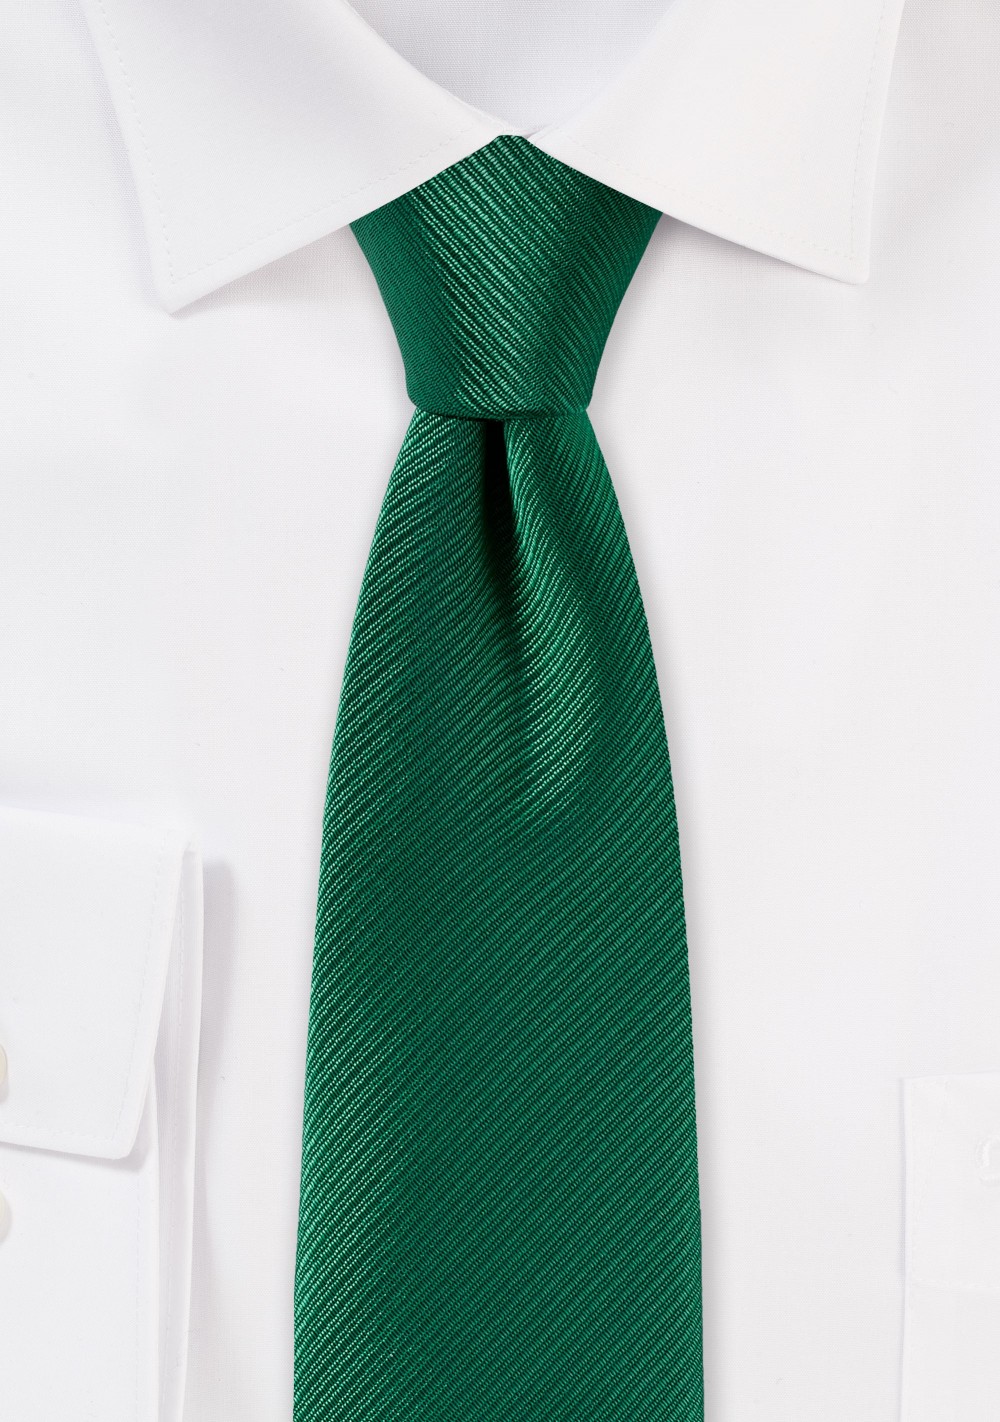 Trendy Skinny Tie in Emerald Green